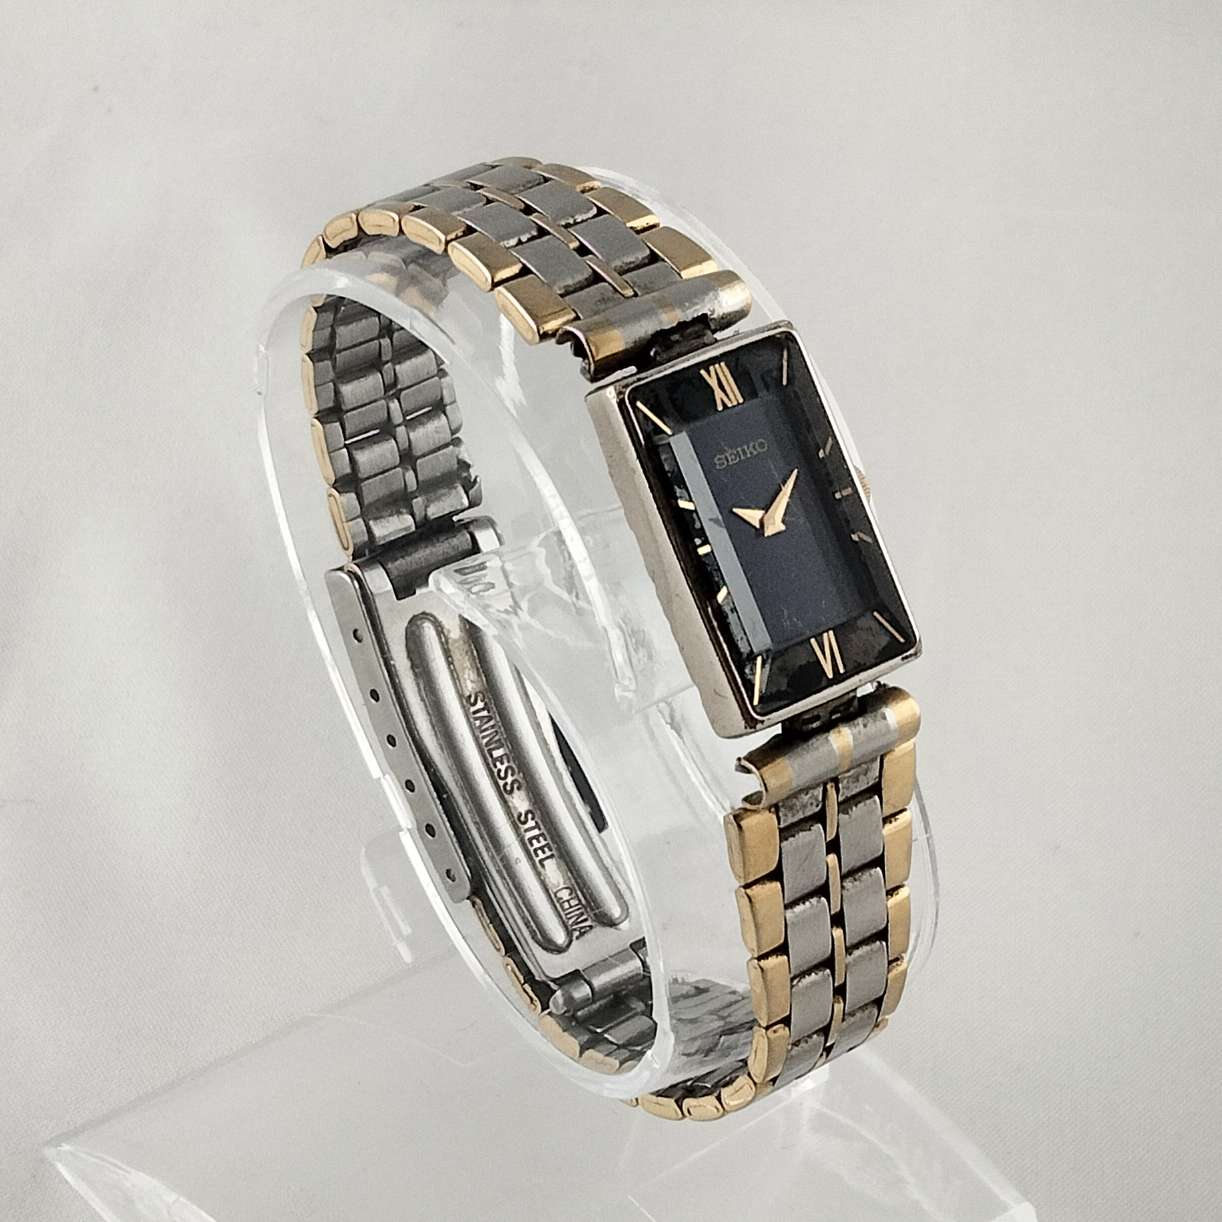 Seiko Unisex Watch, Navy Rectangular Dial, Bracelet Strap